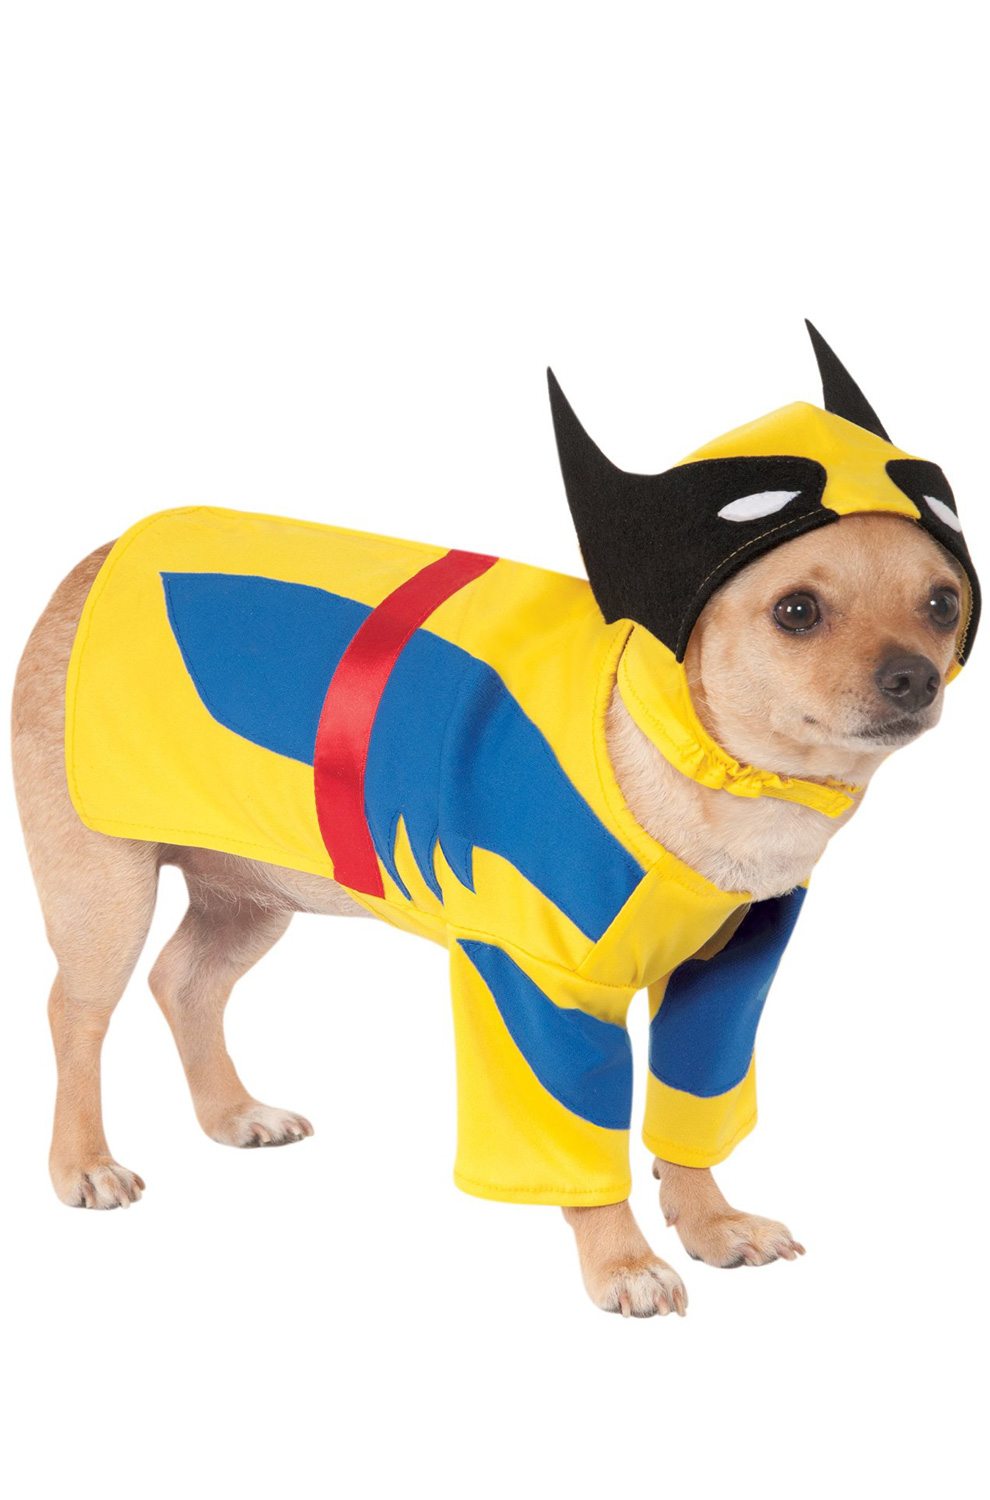 Marvel XMen Wolverine Pet Dog Costume eBay